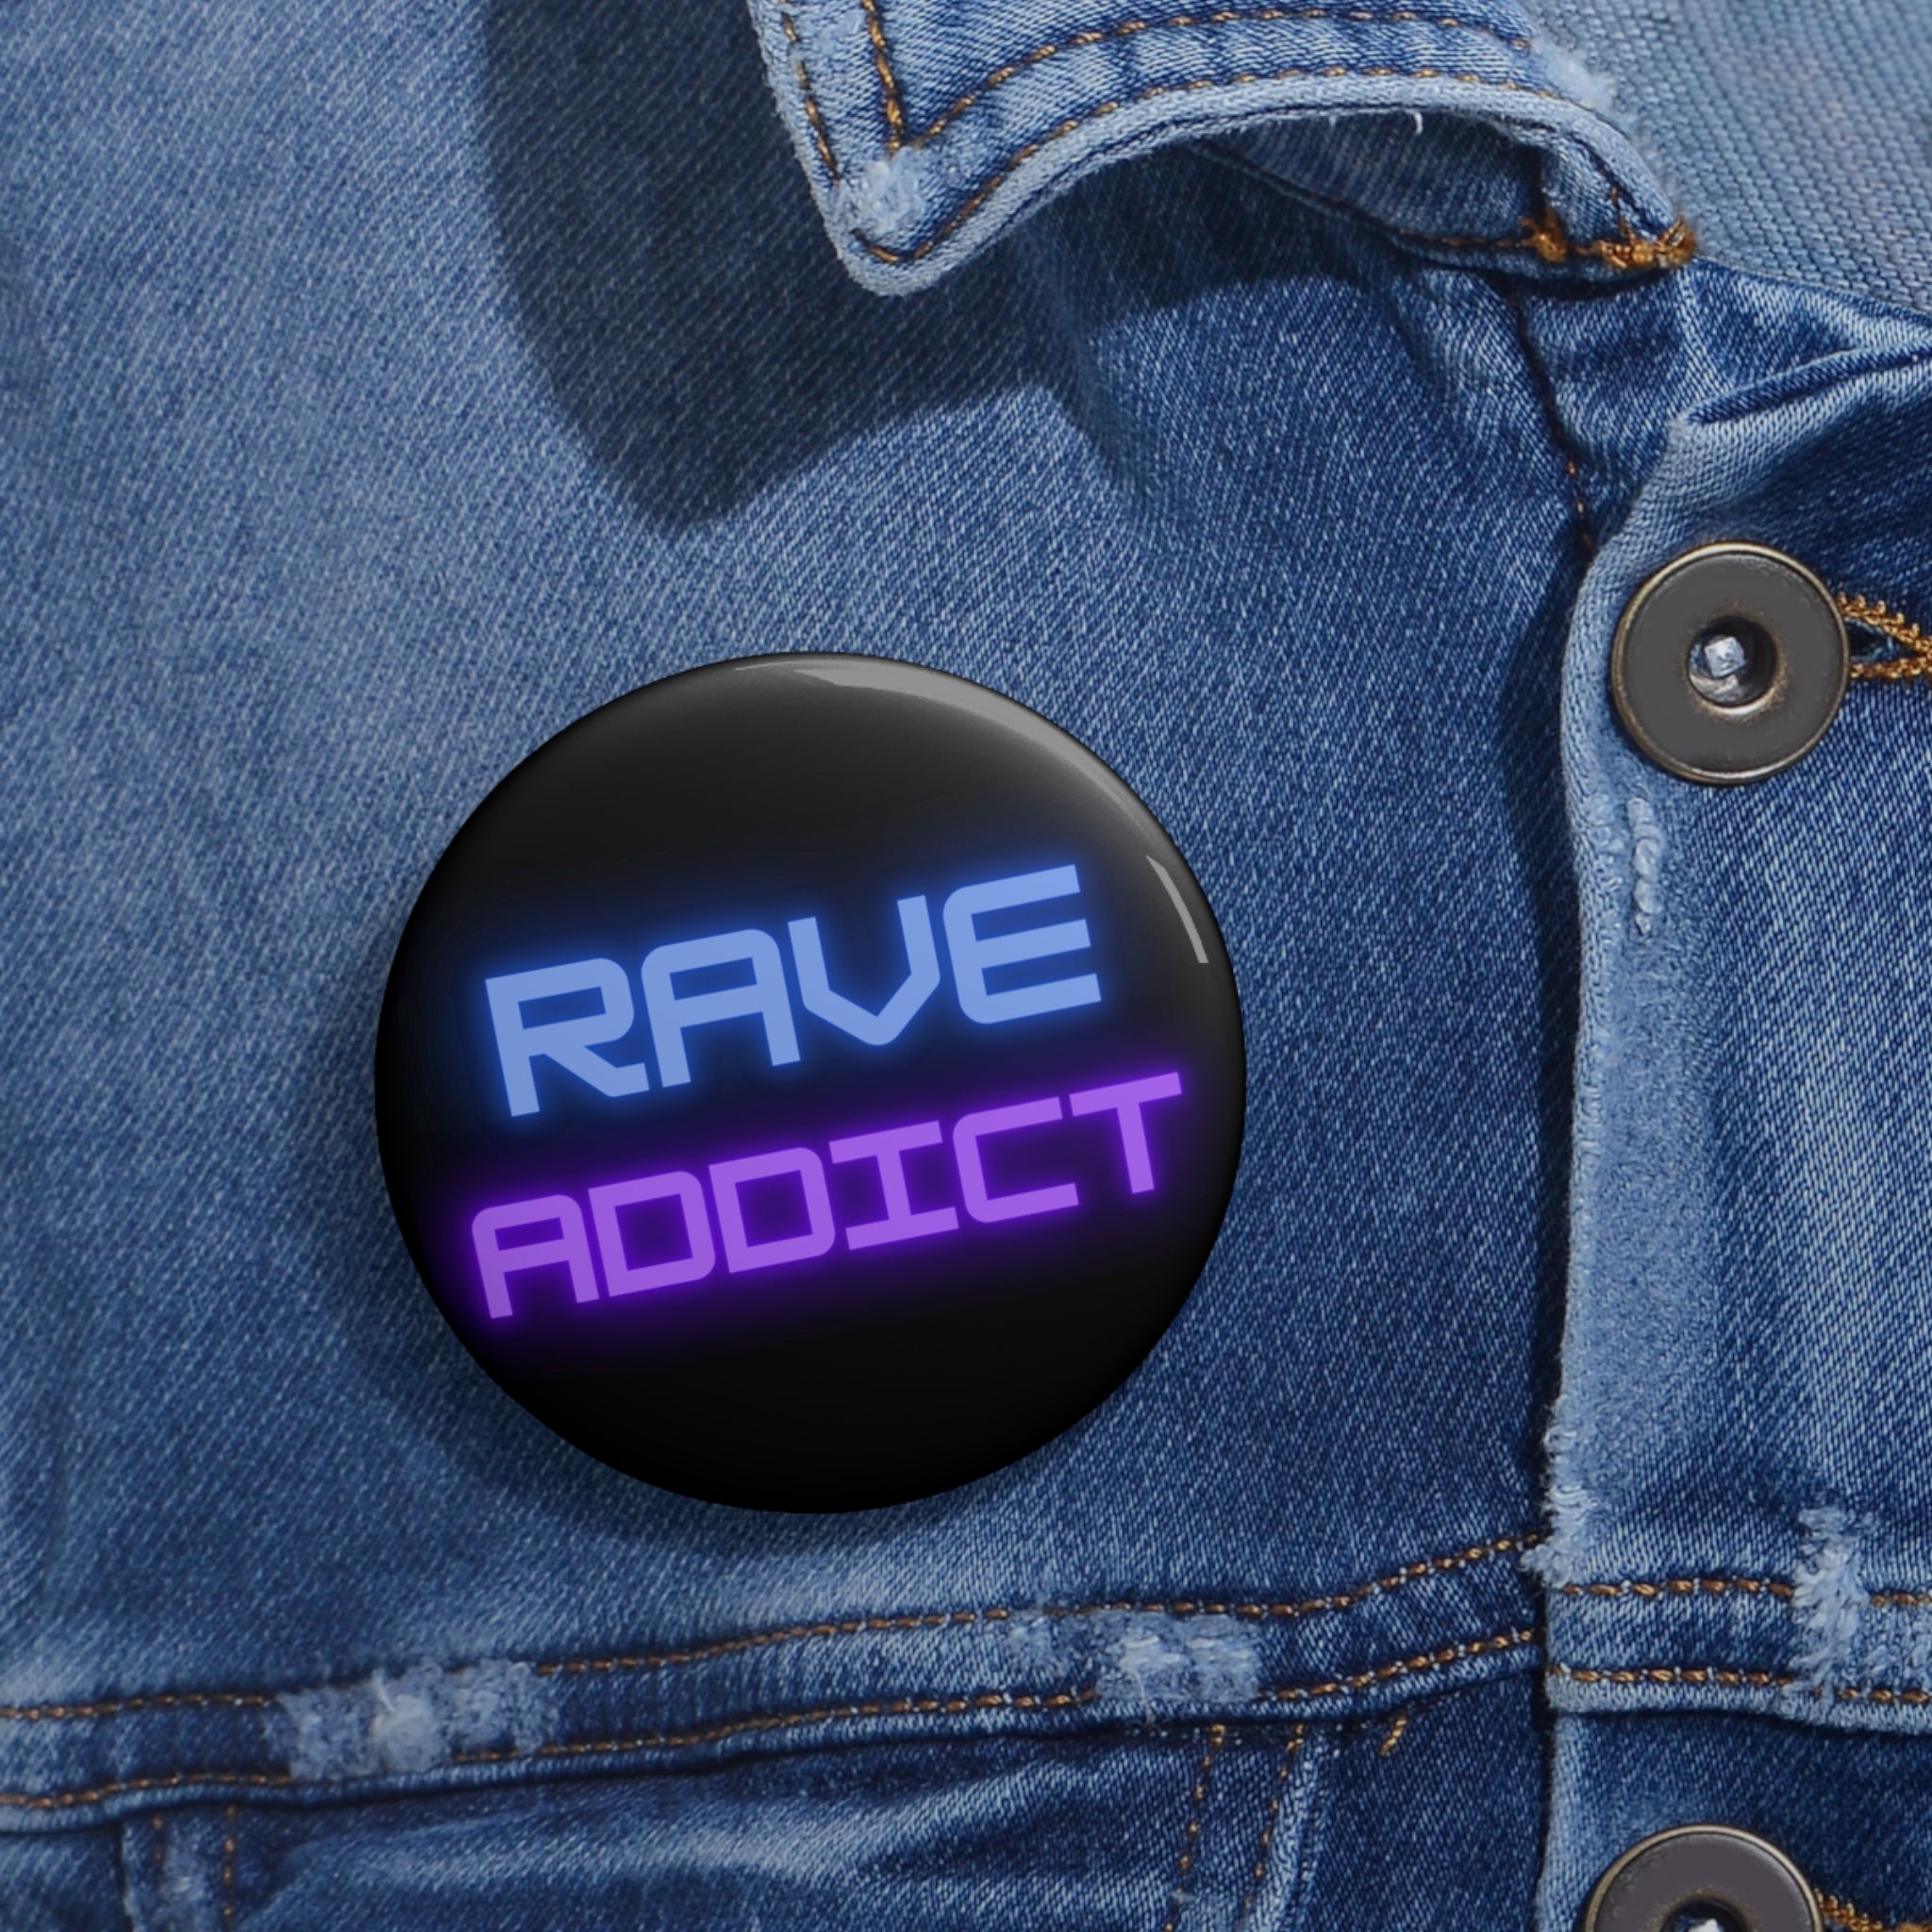 Rave Addict Pin Button